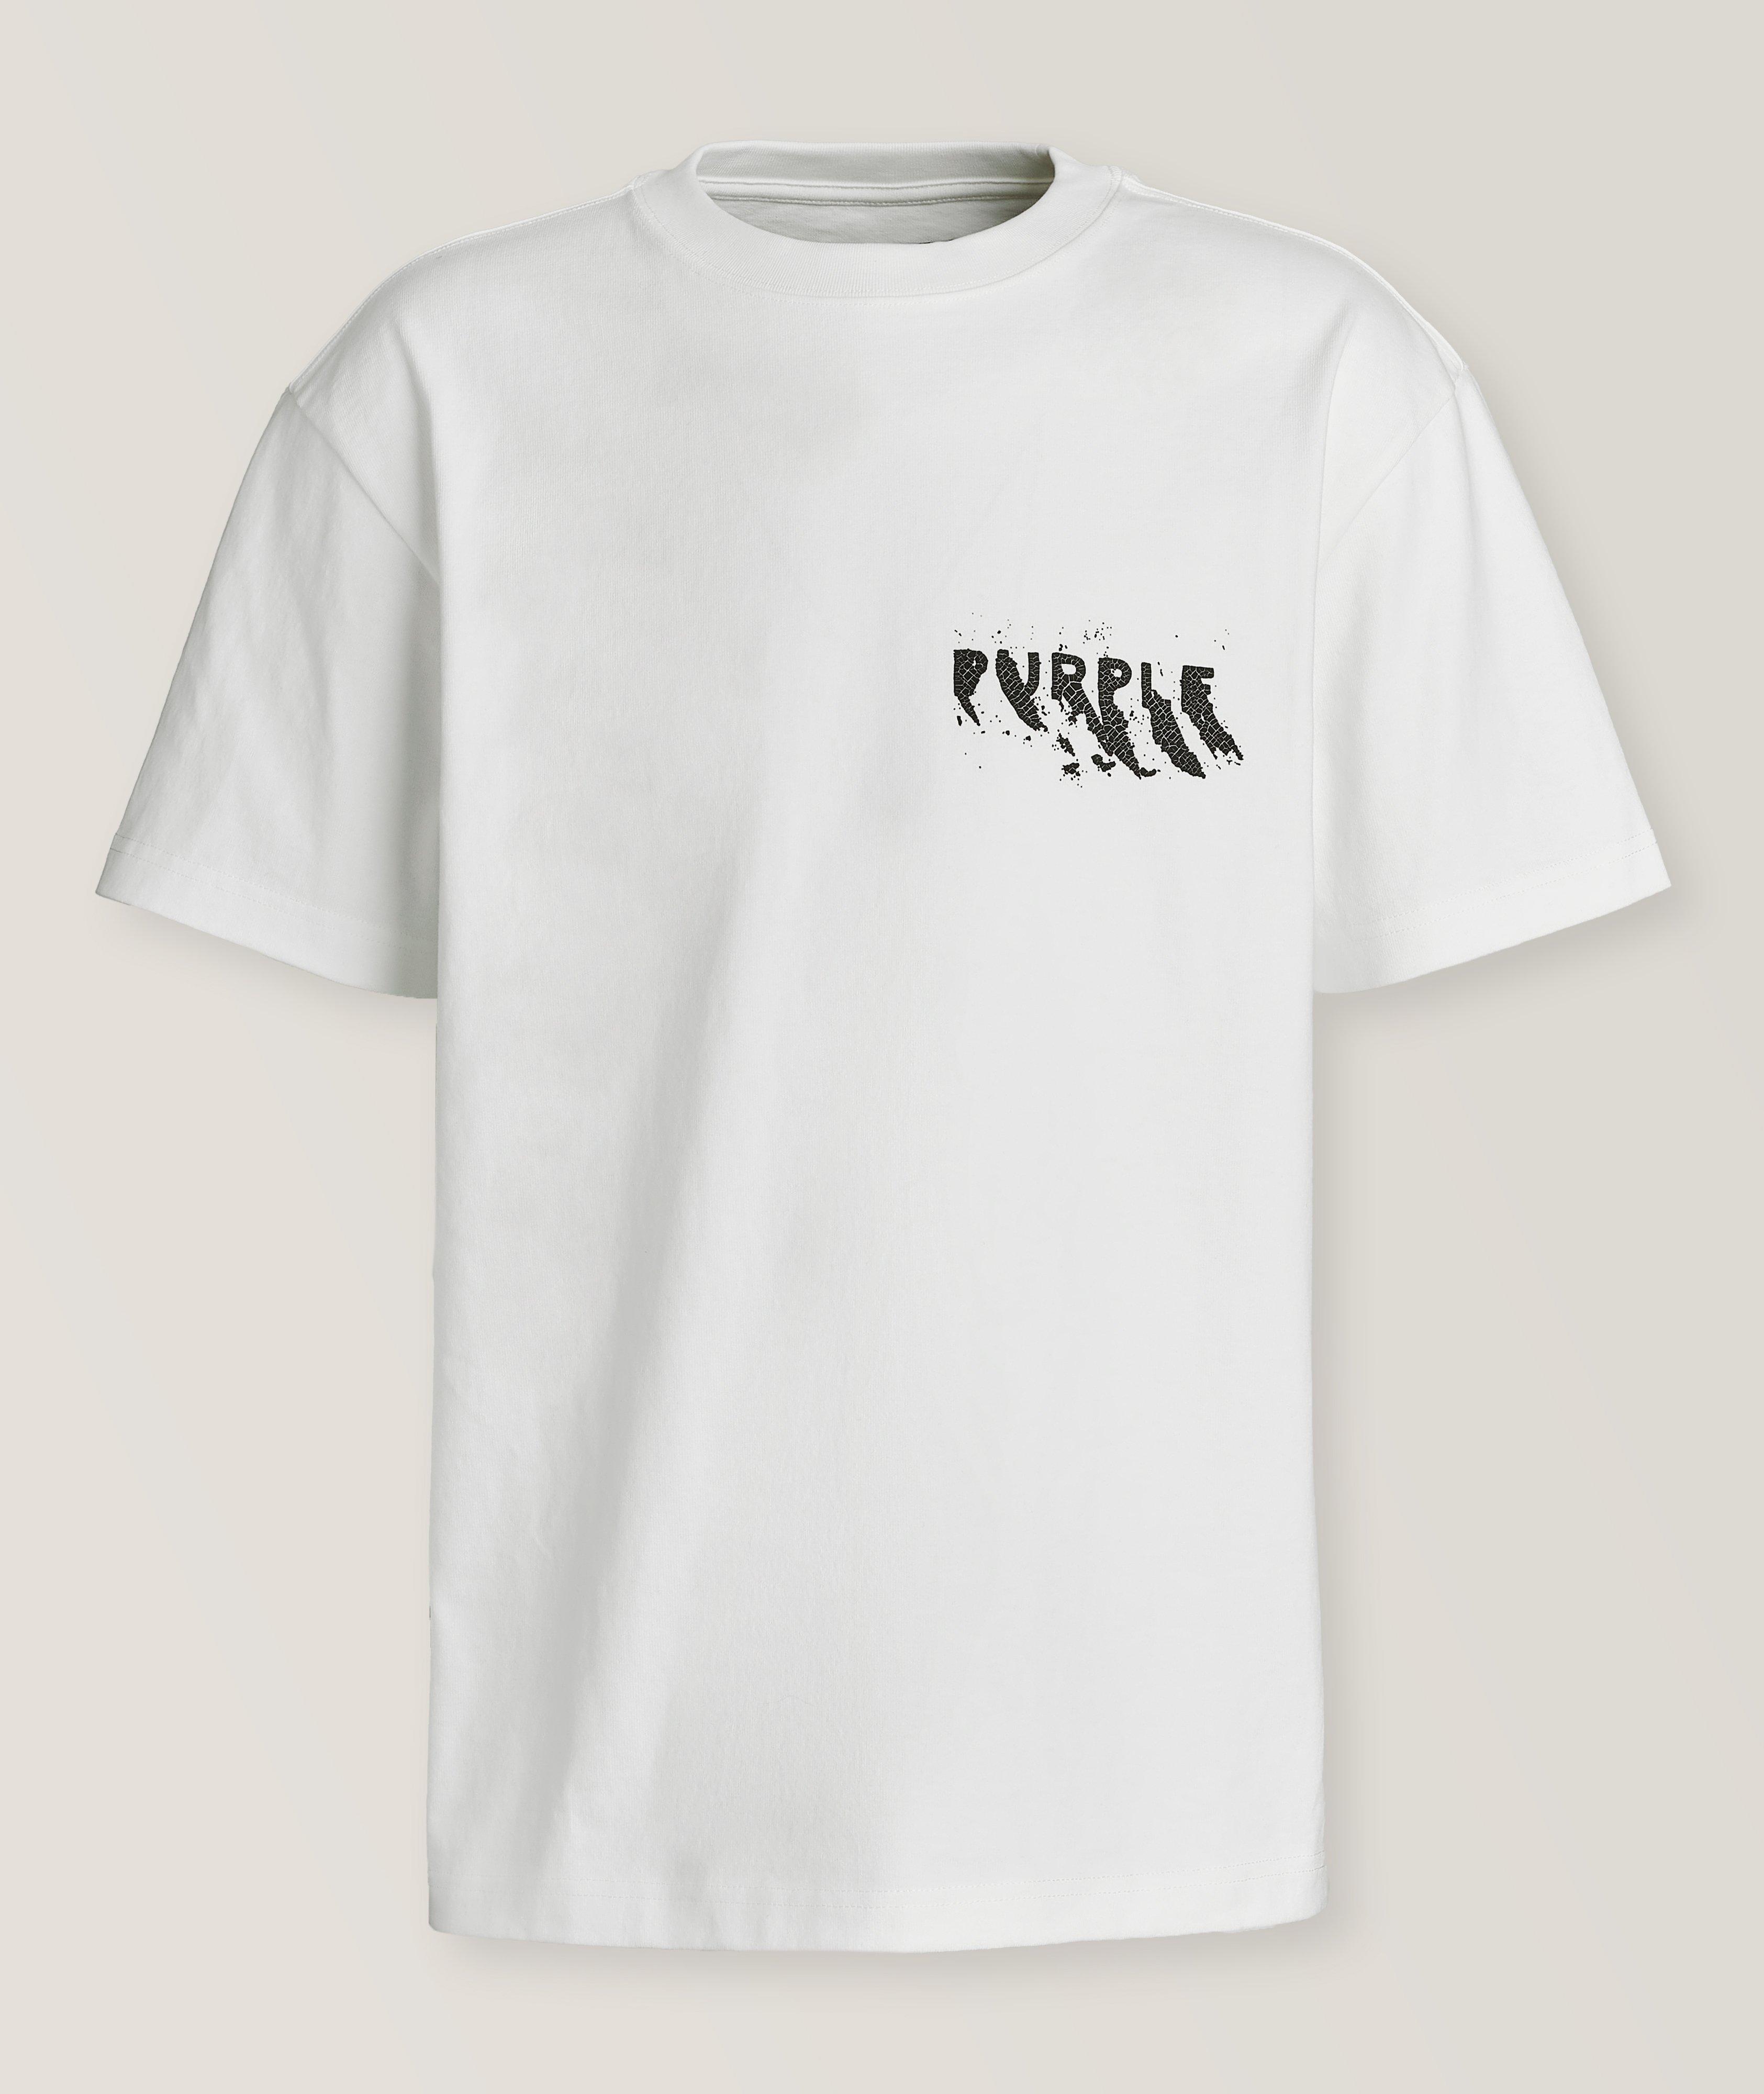 Painted Wordmark T-Shirt image 0